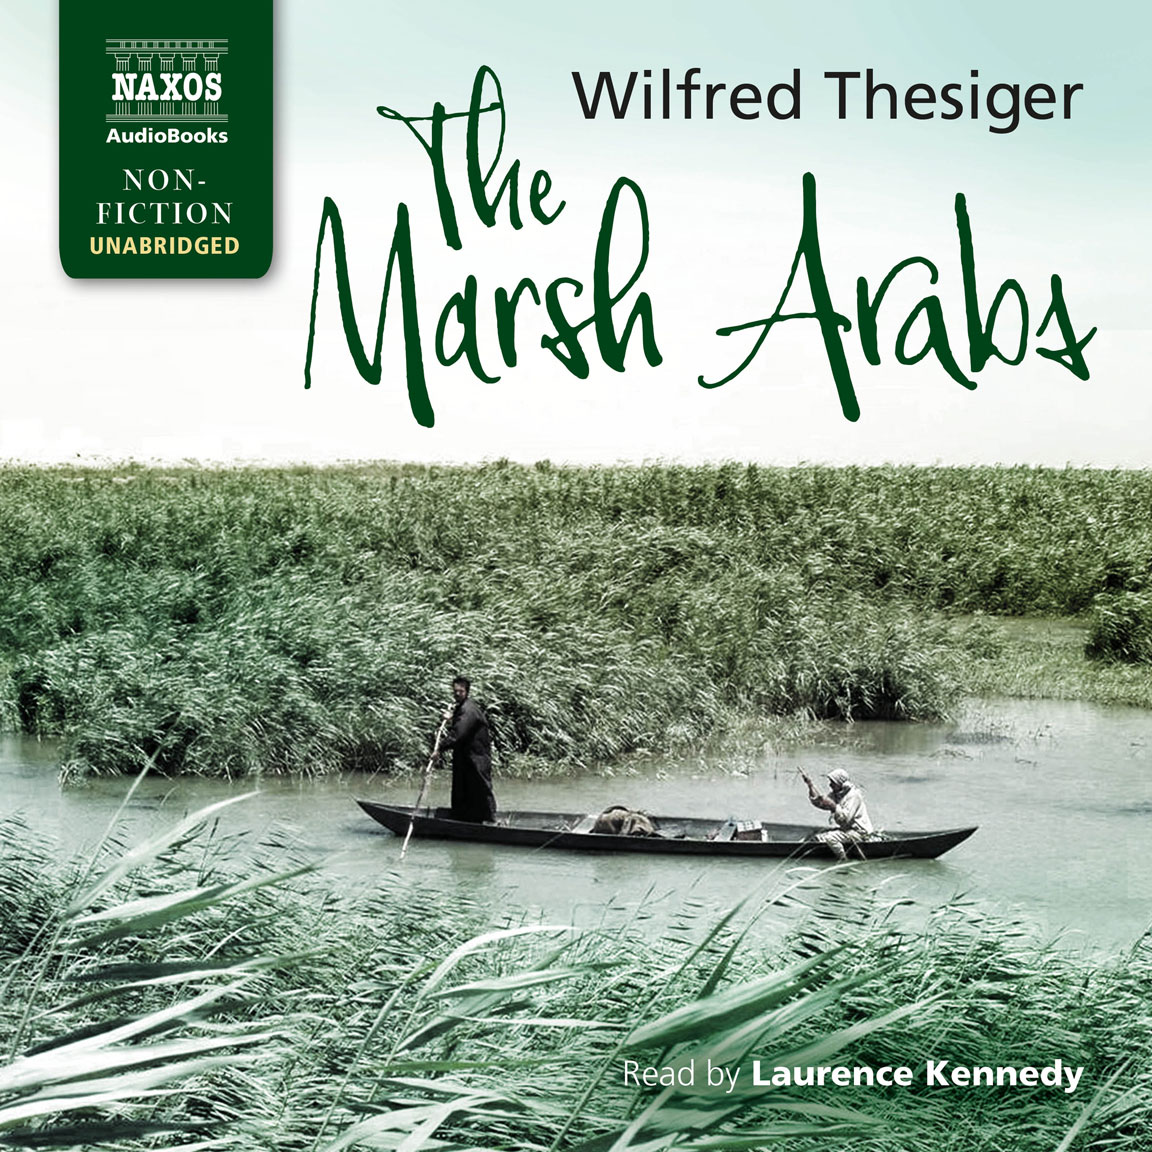 The Marsh Arabs (unabridged)